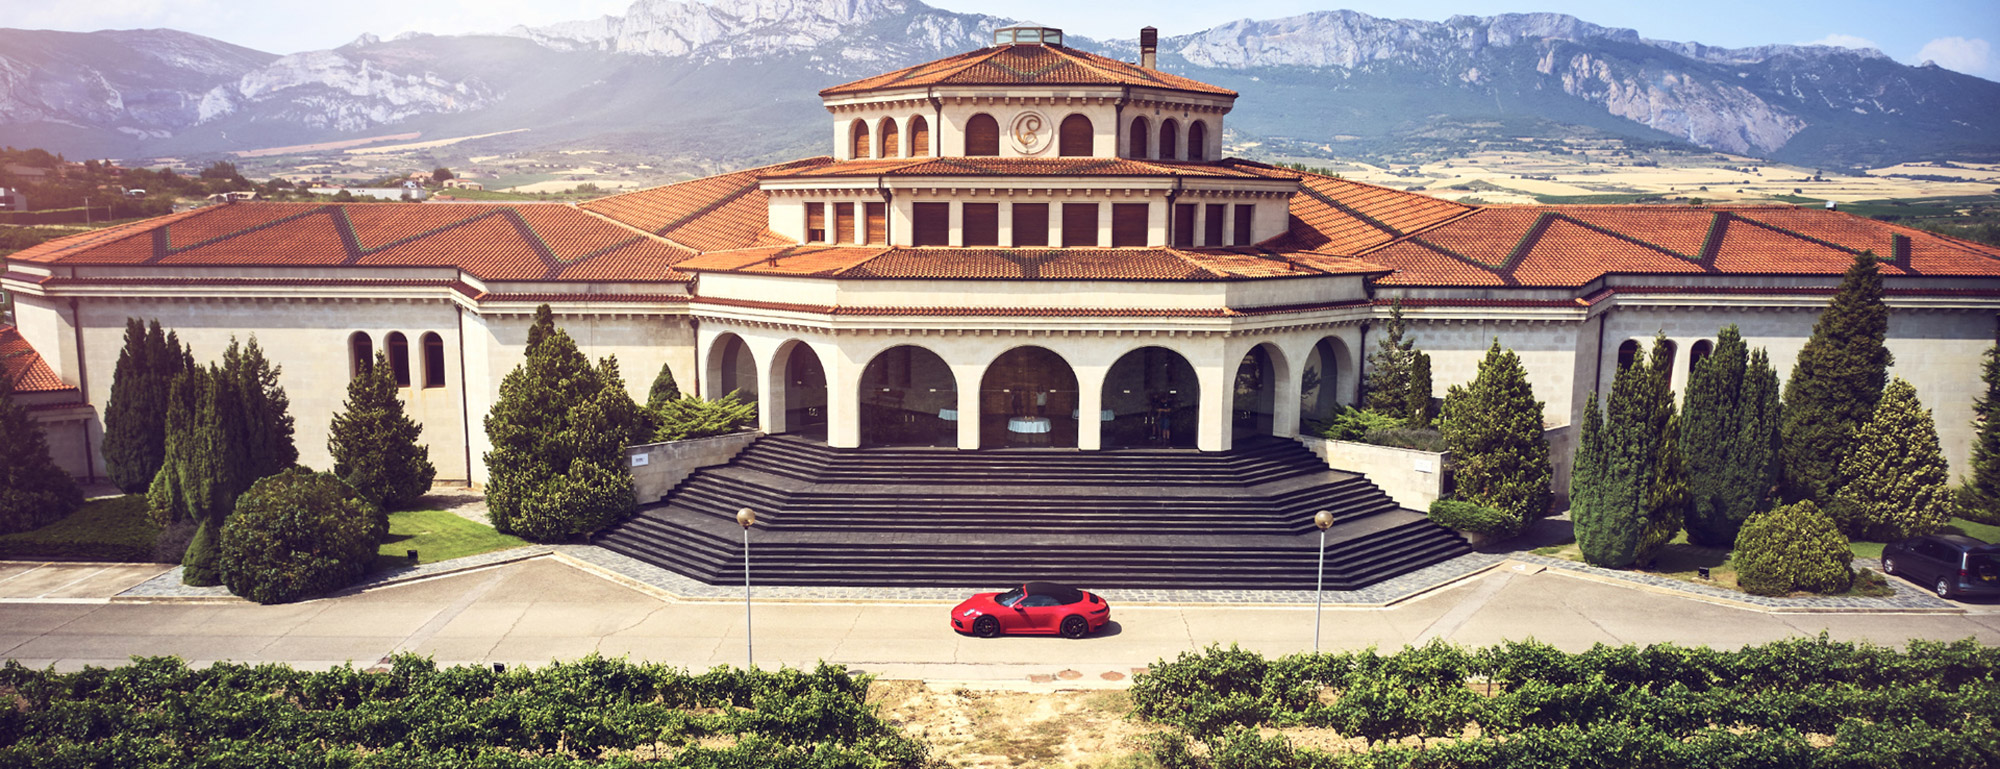 Porsche in front of large wine estate, mountain range behind